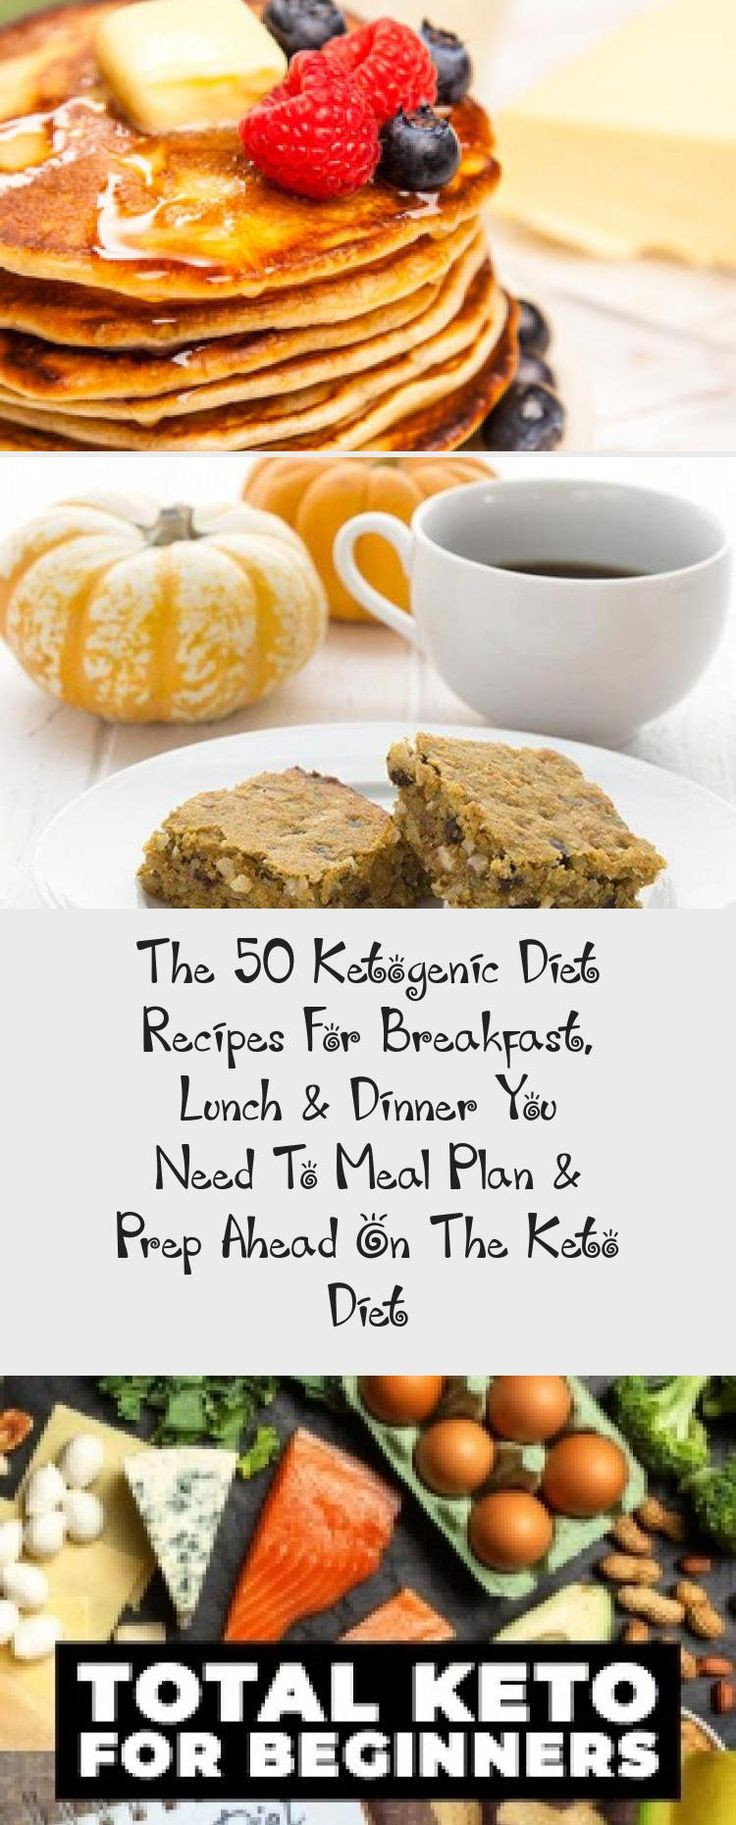 Keto Diet For Beginners Week 1 Easy
 This keto t for beginners meal plan has more than week